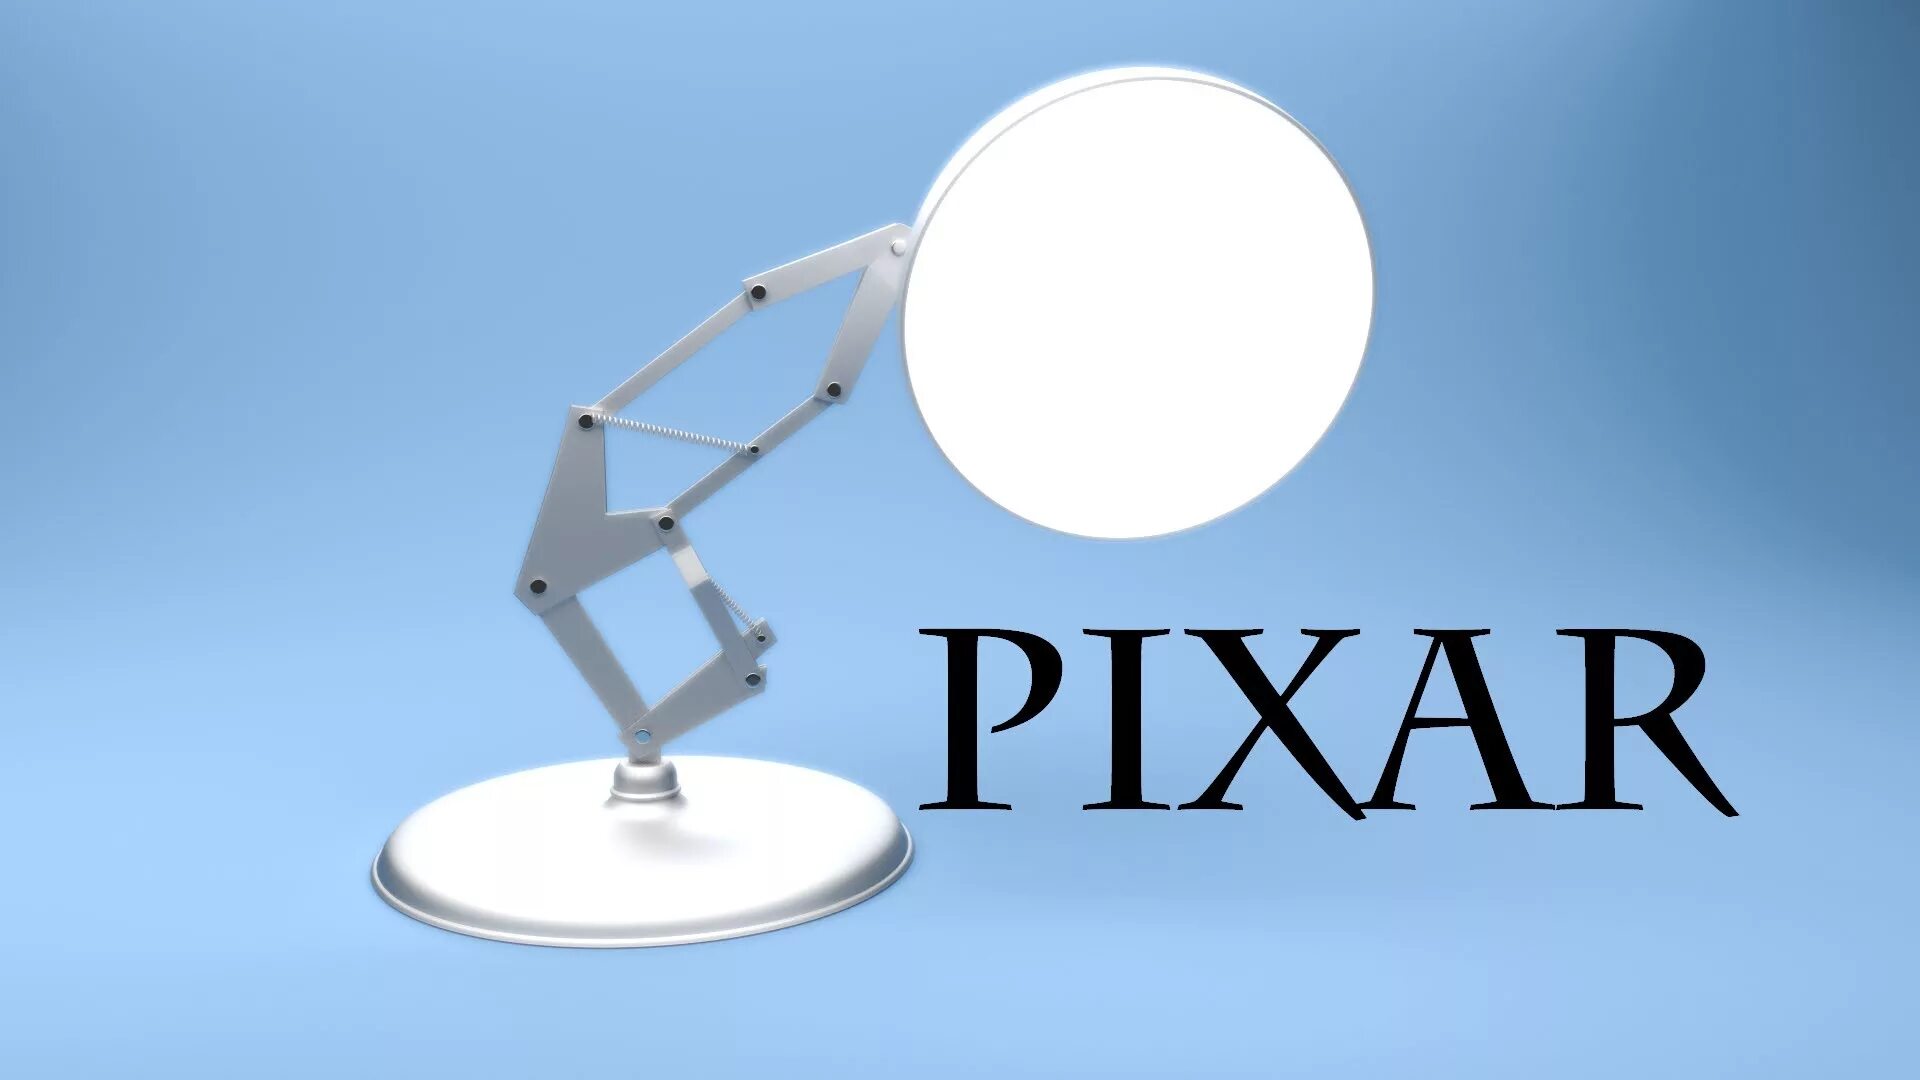 Pixar logo. Лампа Пиксар. Студия Пиксар. Пиксар логотип. Светильник студии Пиксар.